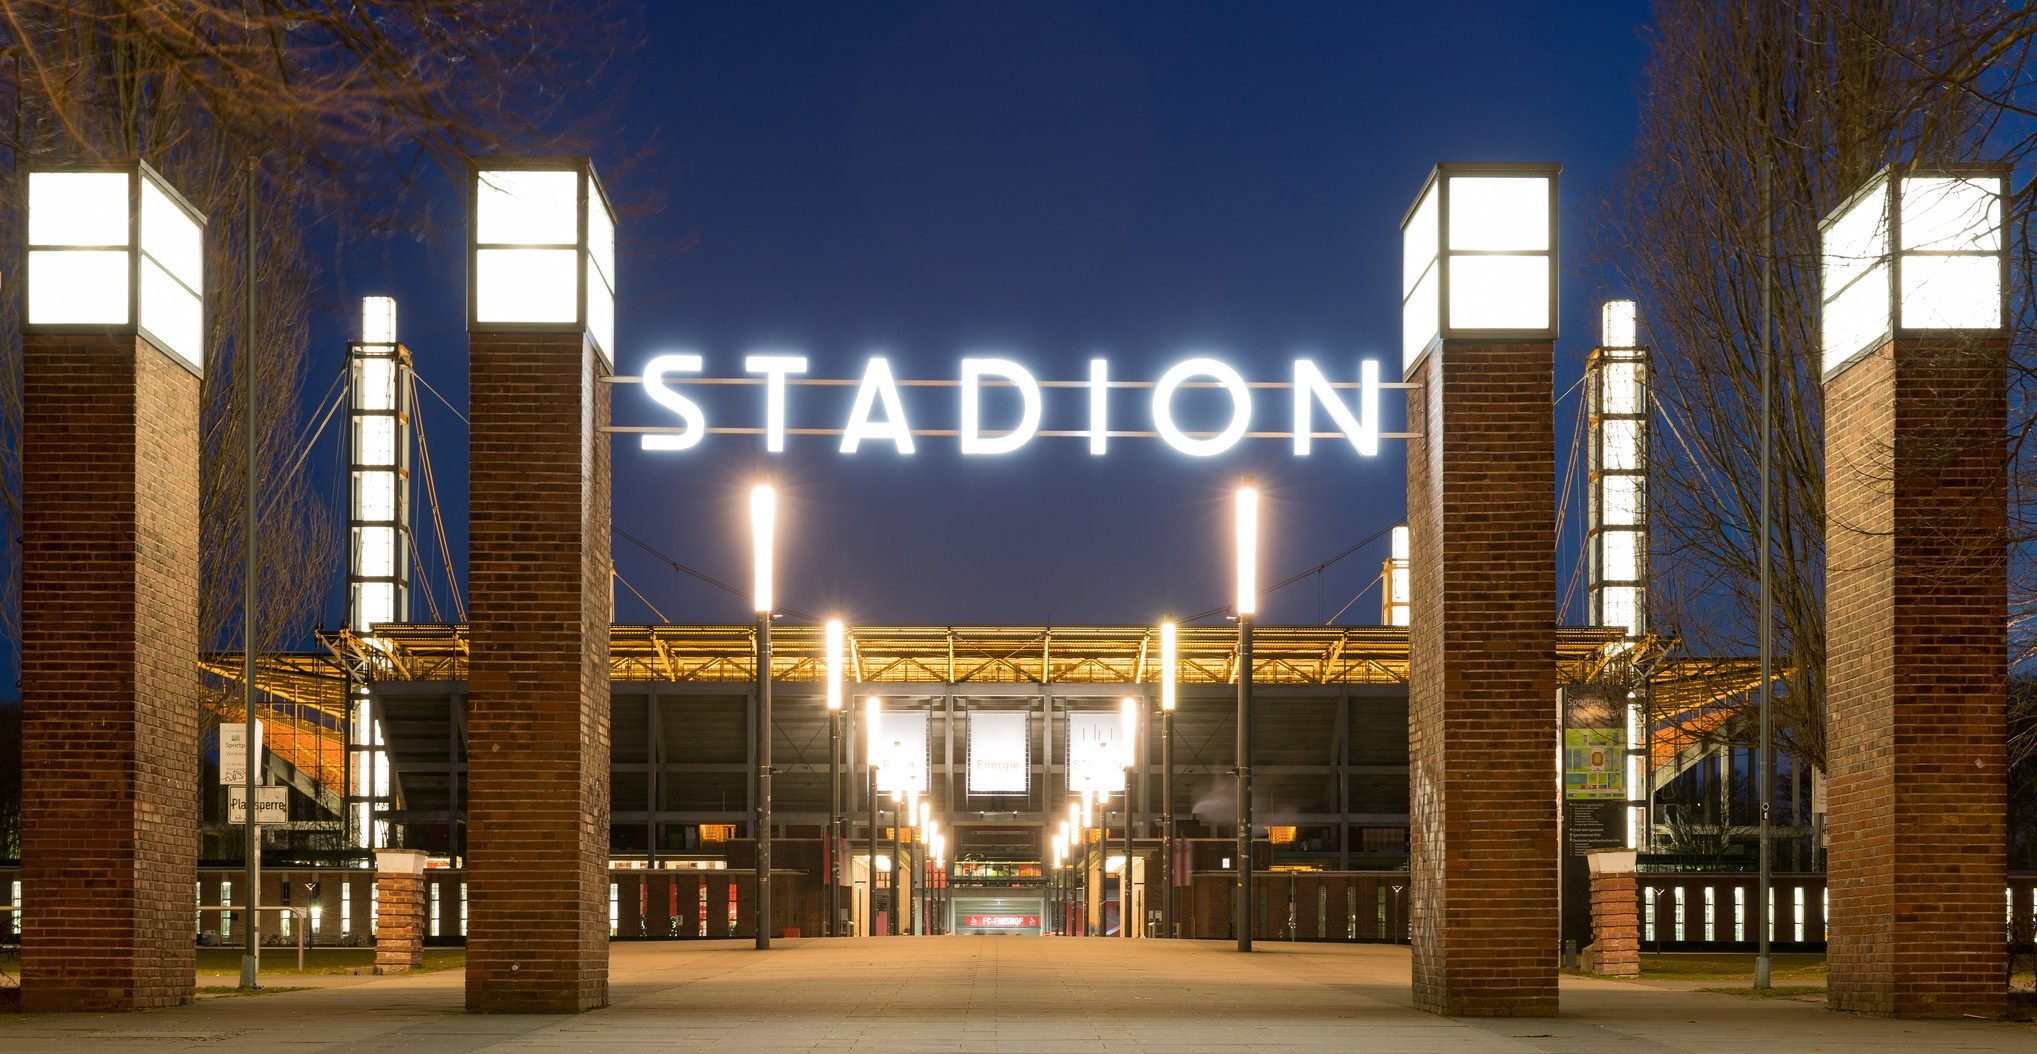 Stadion Leuchtschild|BVB Flagge|RB Flagge